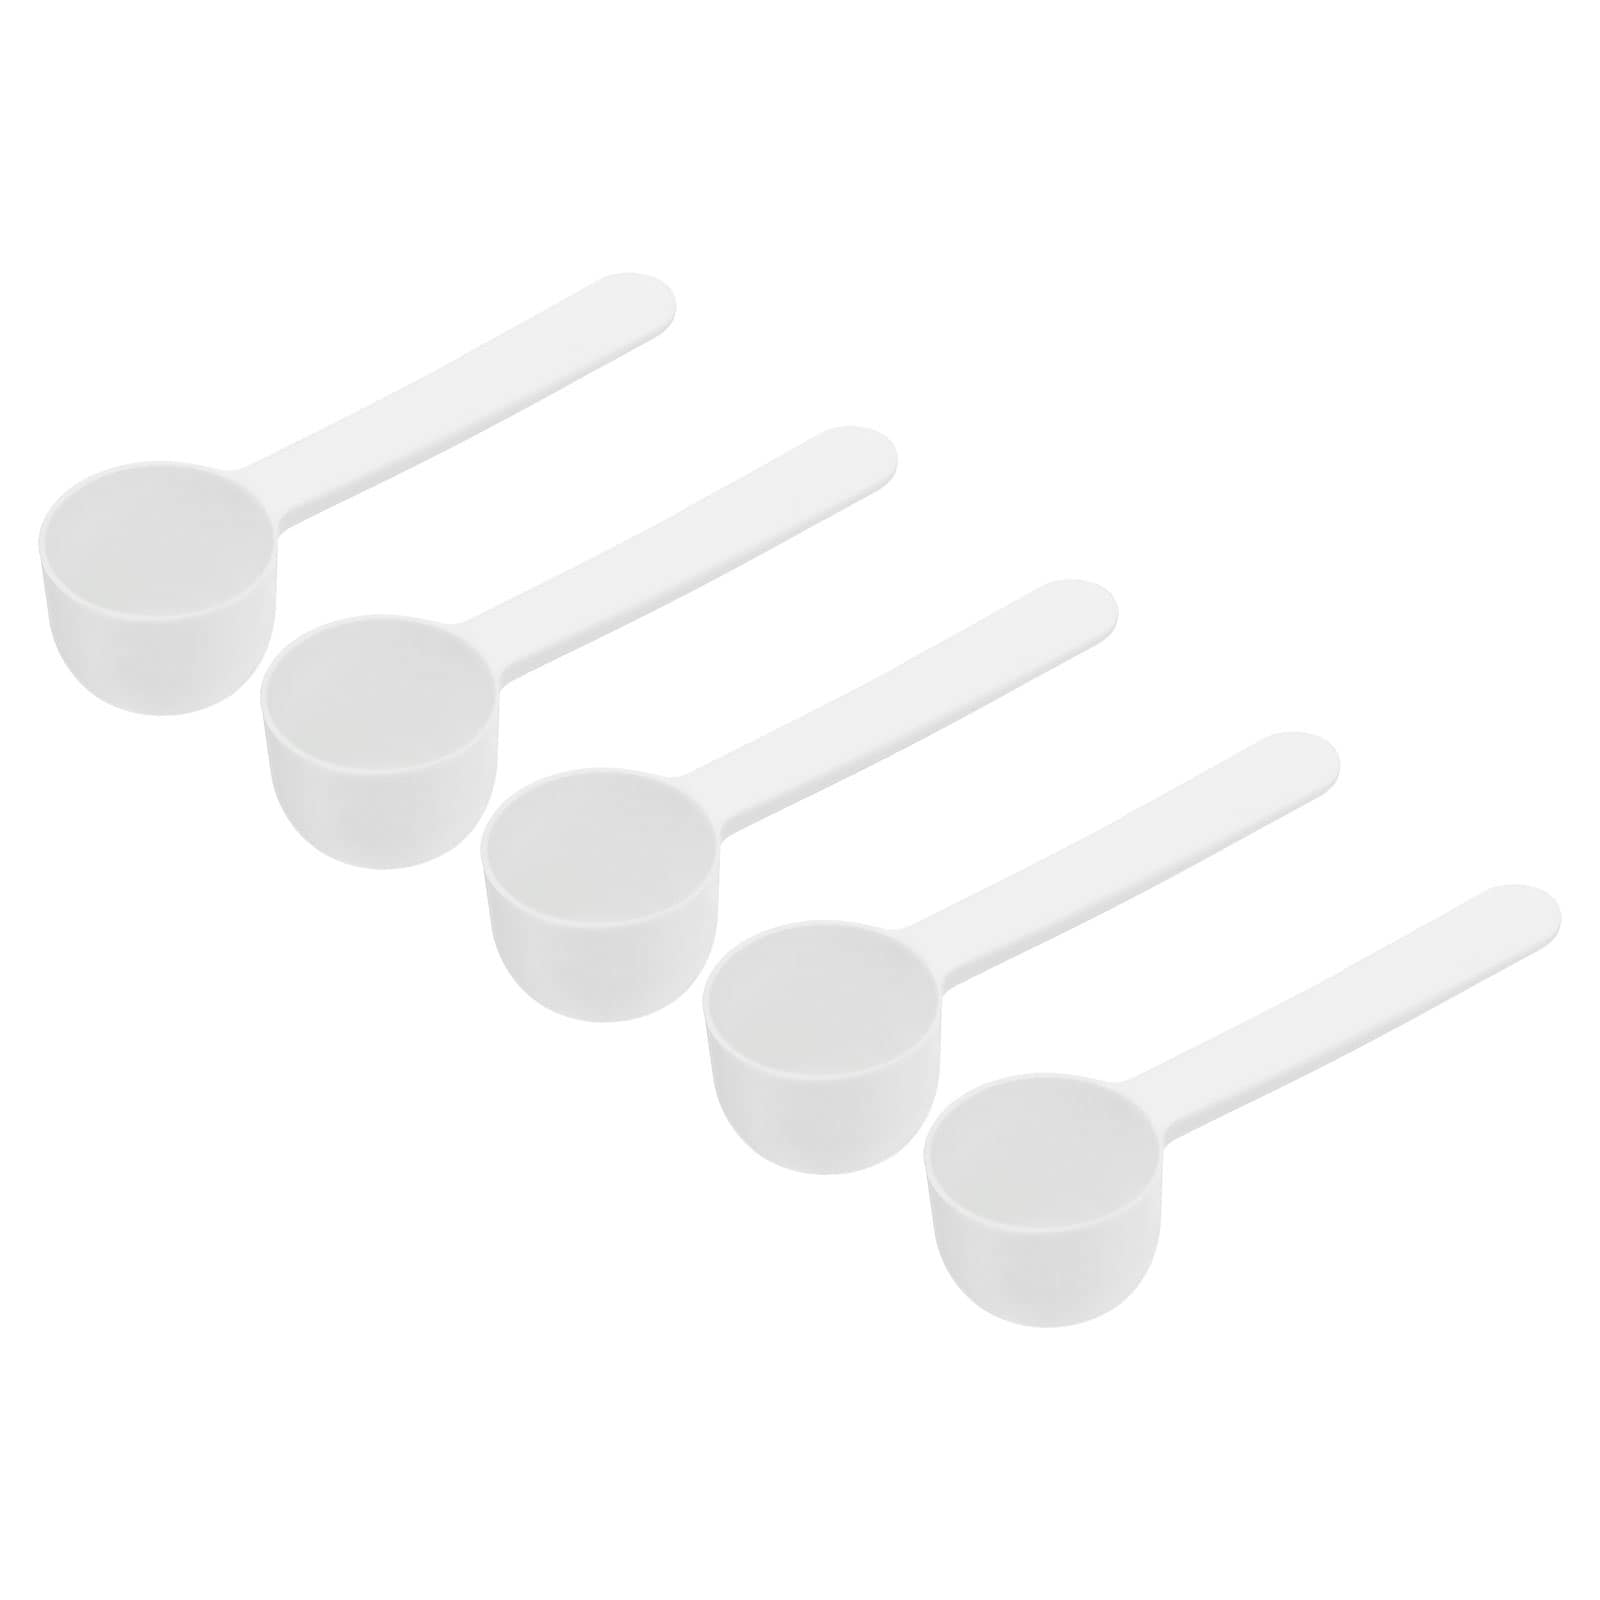 Micro Spoons 5 Gram Measuring Scoop Plastic Flat Bottom Spoon 30pcs - White